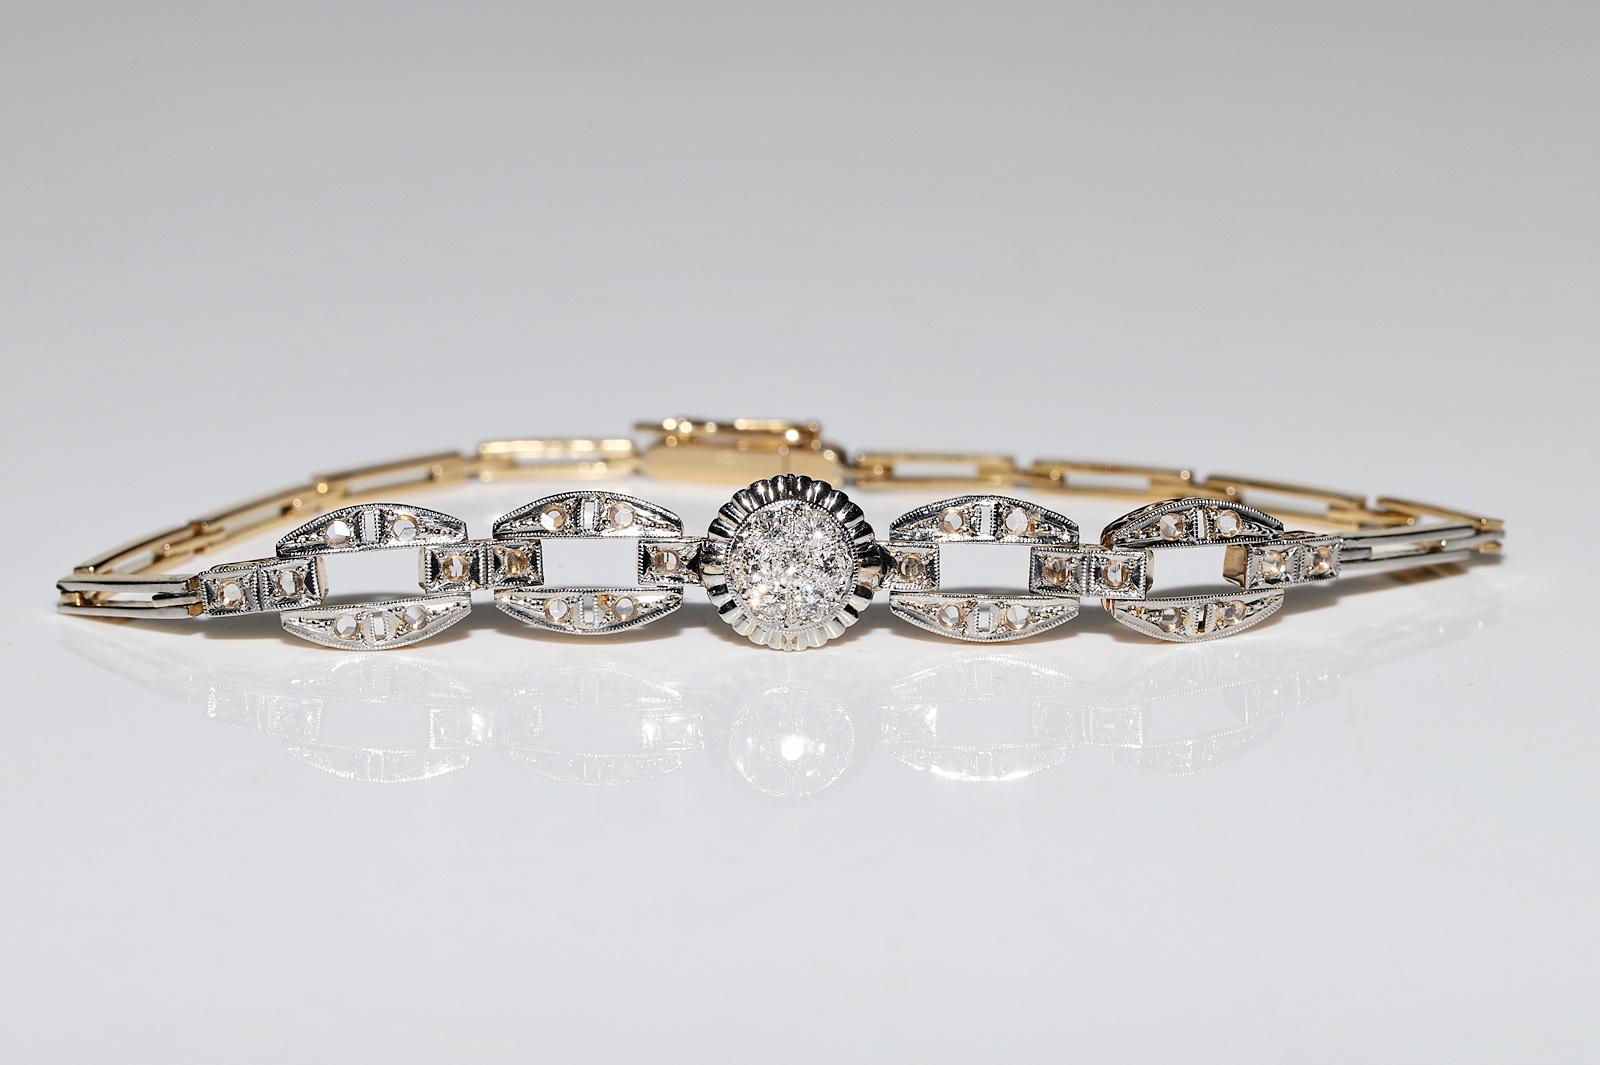 Antique Circa 1900s 18k Gold Natural Diamond Decorated Bracelet For Sale 1